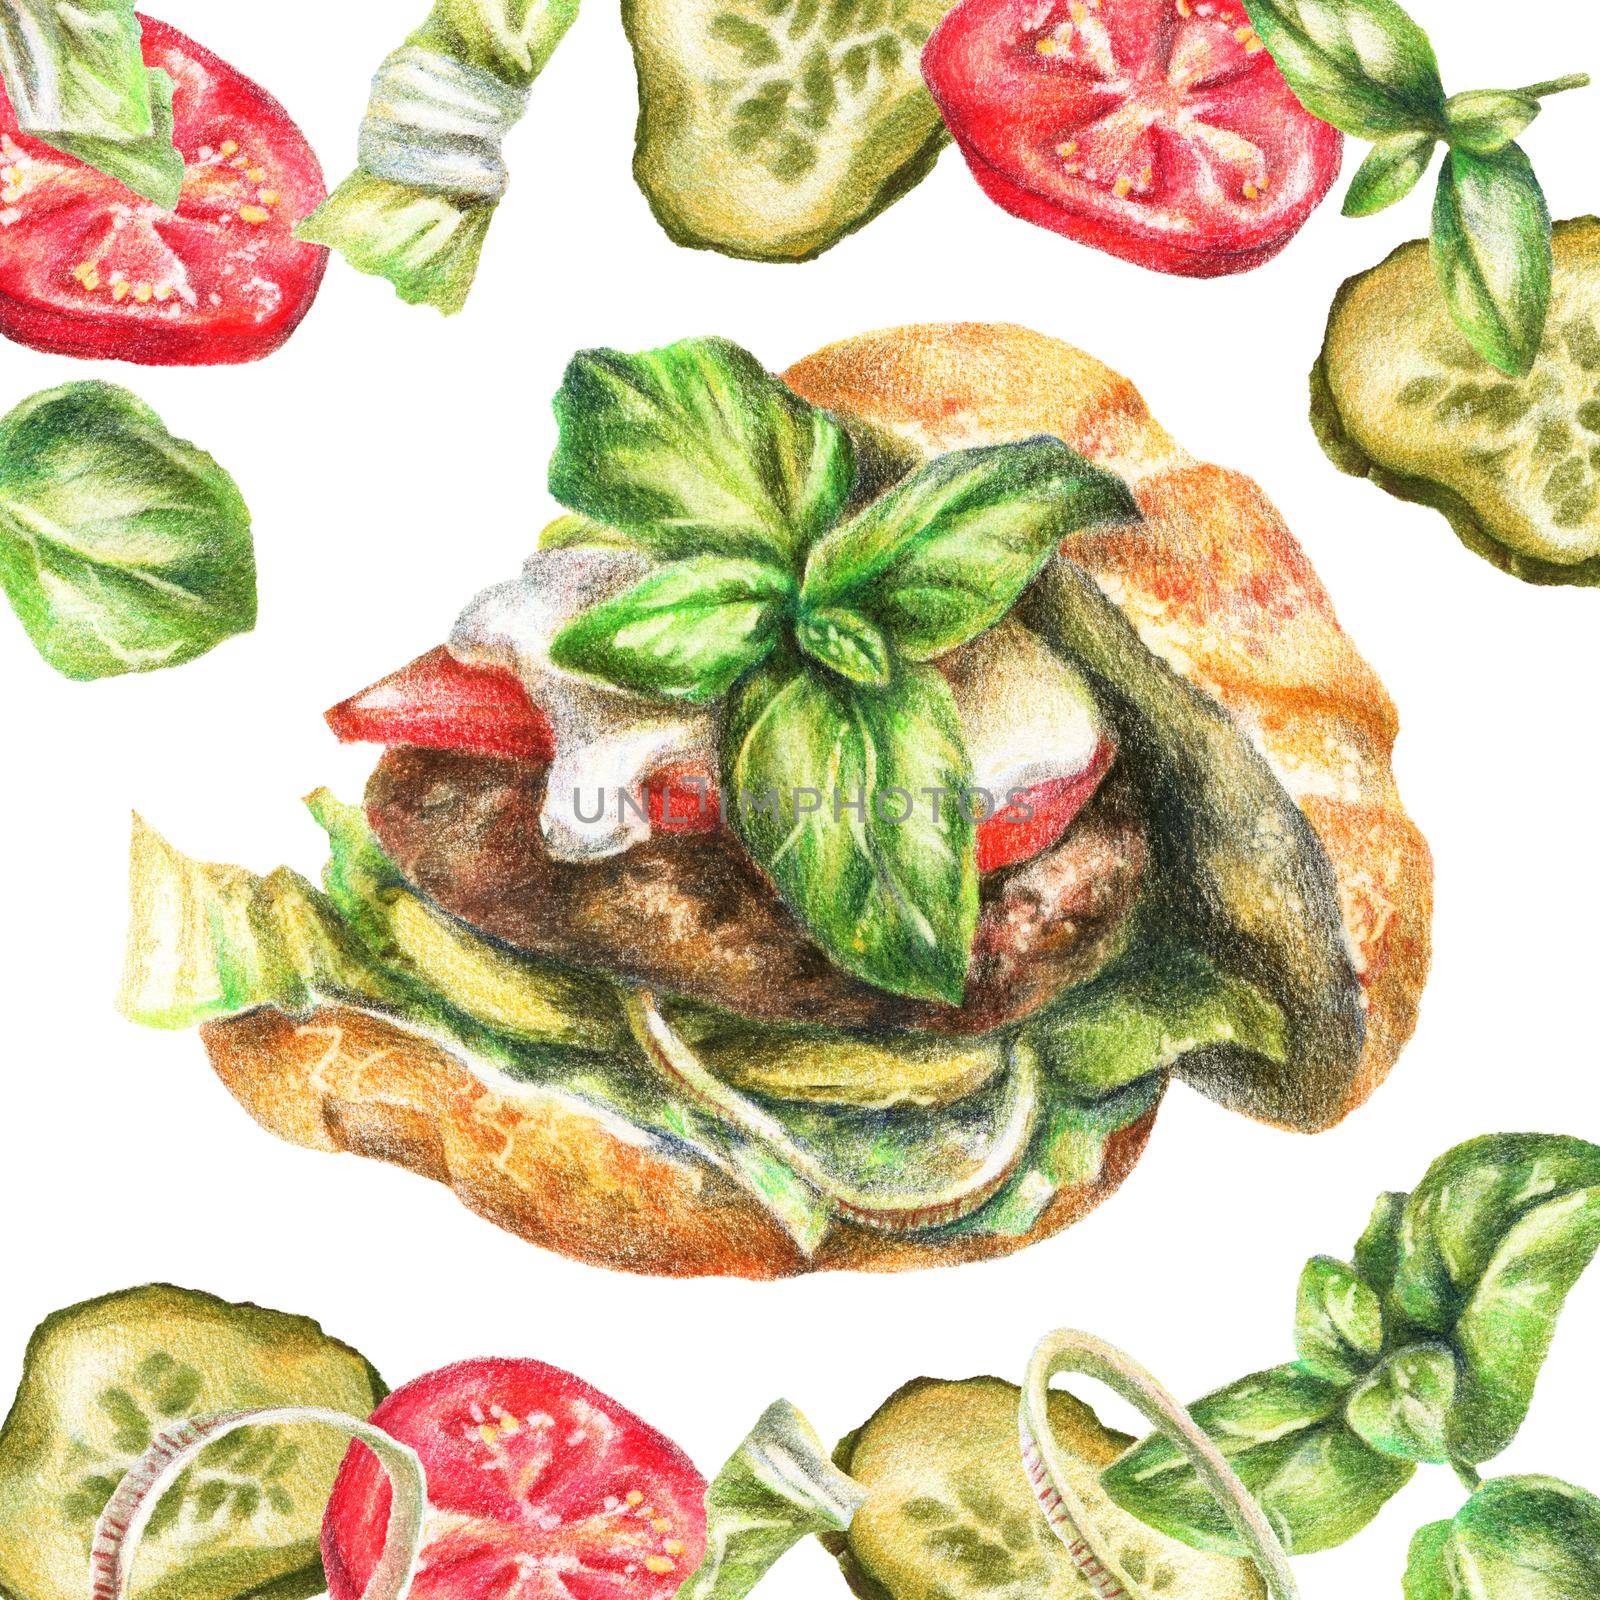 Color pencils food illustration by Olatarakanova